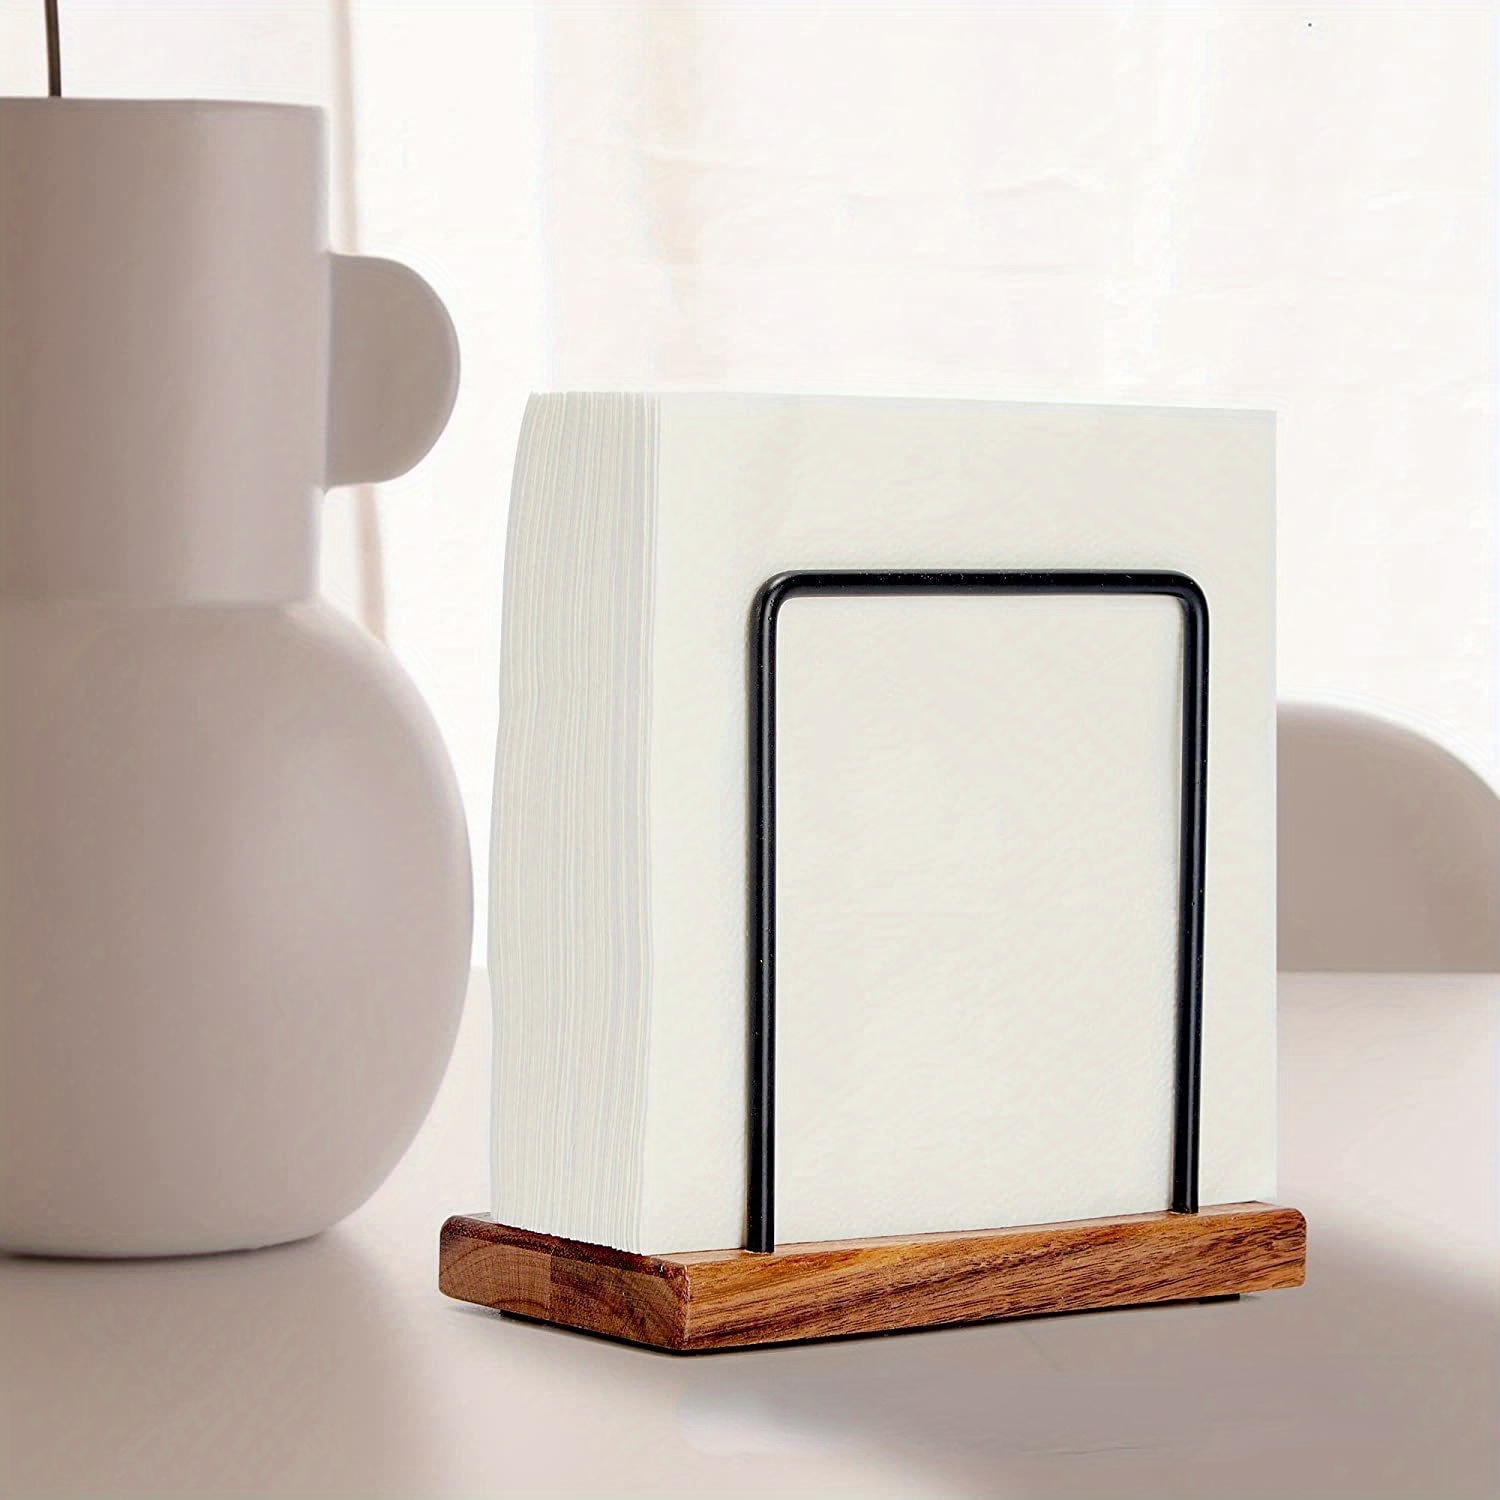 

Elegant Wooden Tissue Holder - Desktop Napkin Stand For Home & Restaurant, Solid Wood Paper Towel Organizer